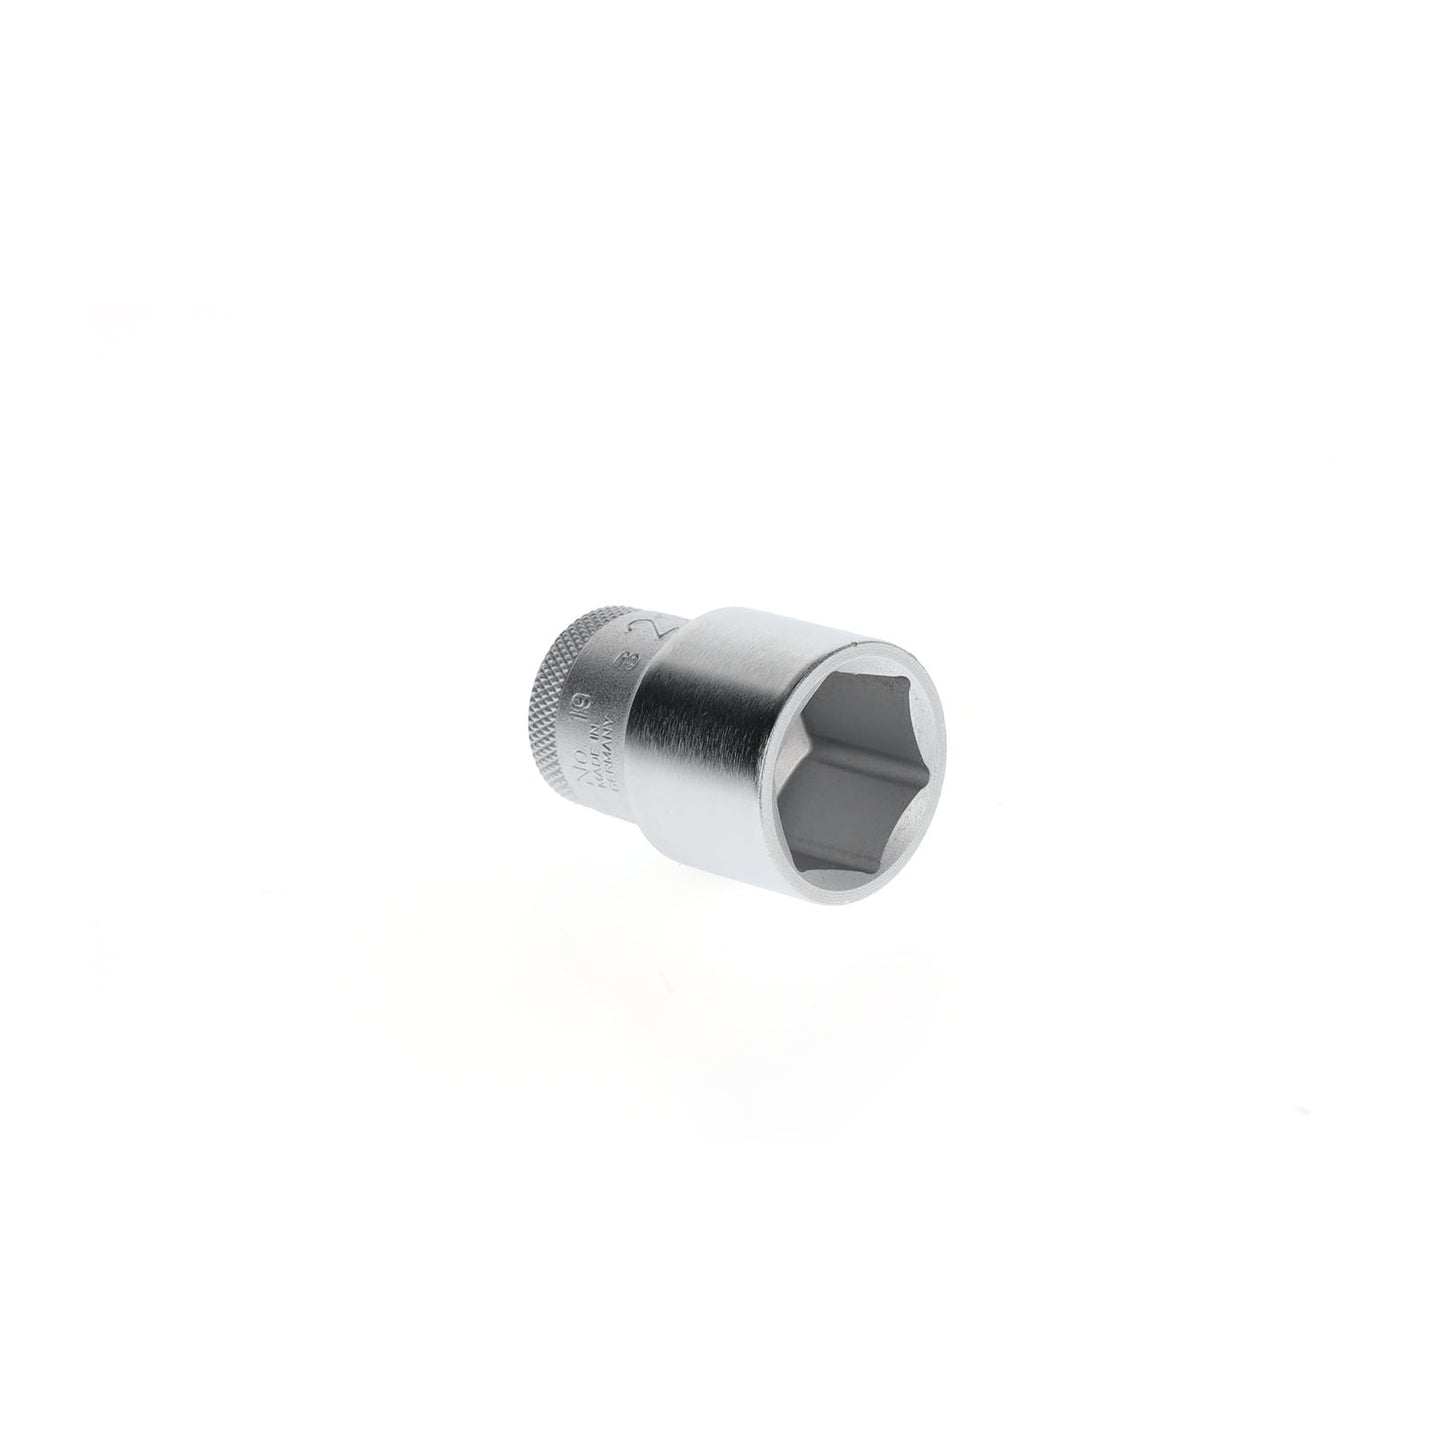 GEDORE 19 22 - Hexagonal Socket 1/2", 22mm (6131690)